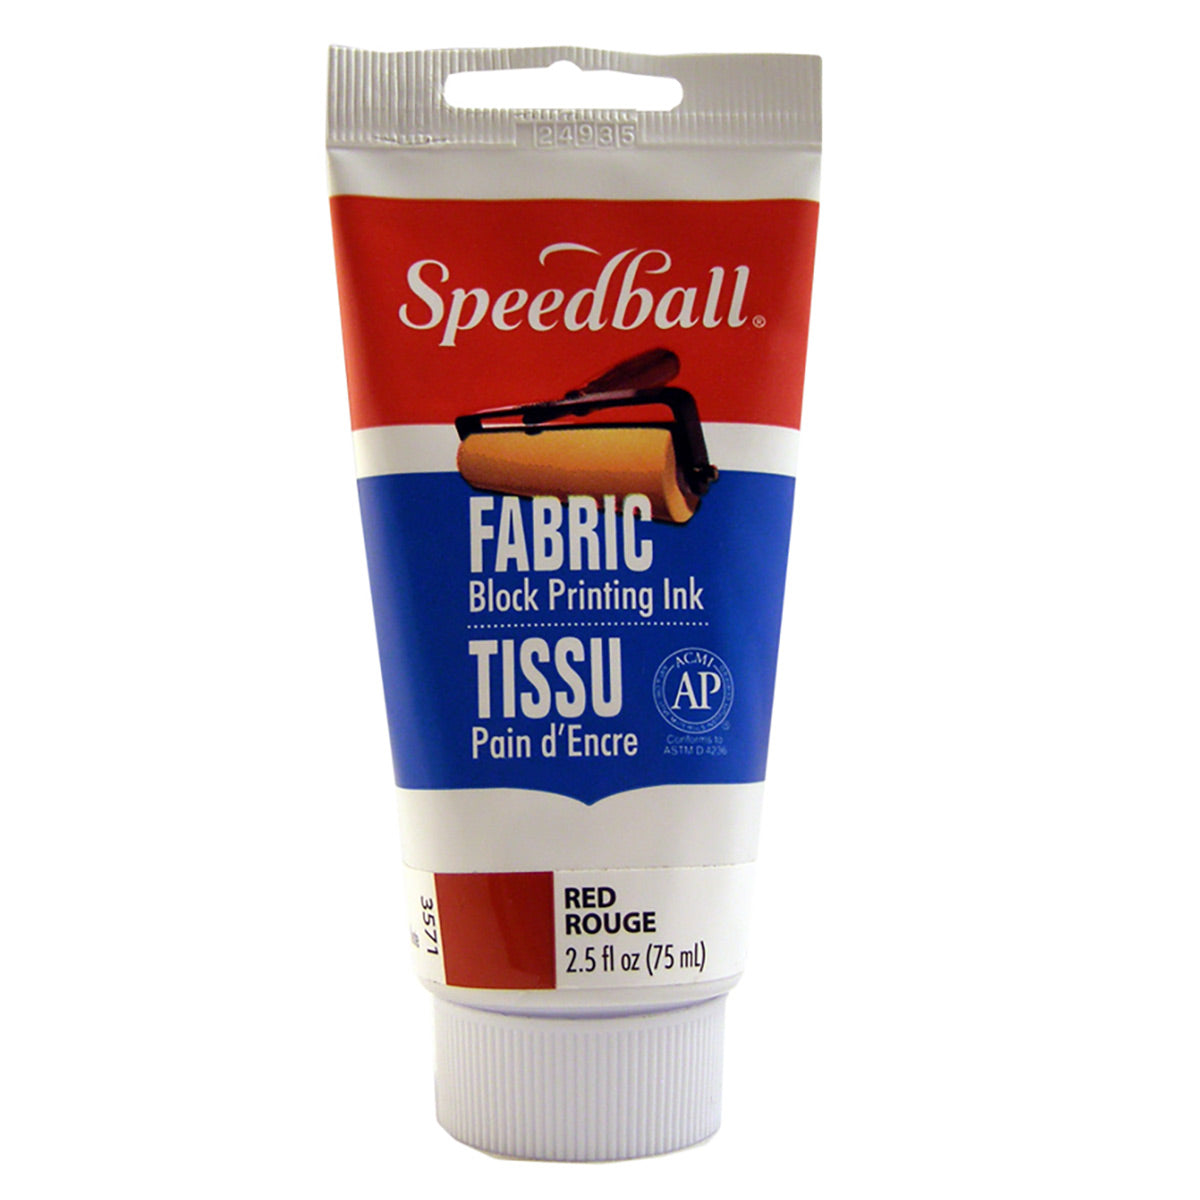 Speedball - Fabric Block Druckfarbe 75ml (2.5oz) - Rot